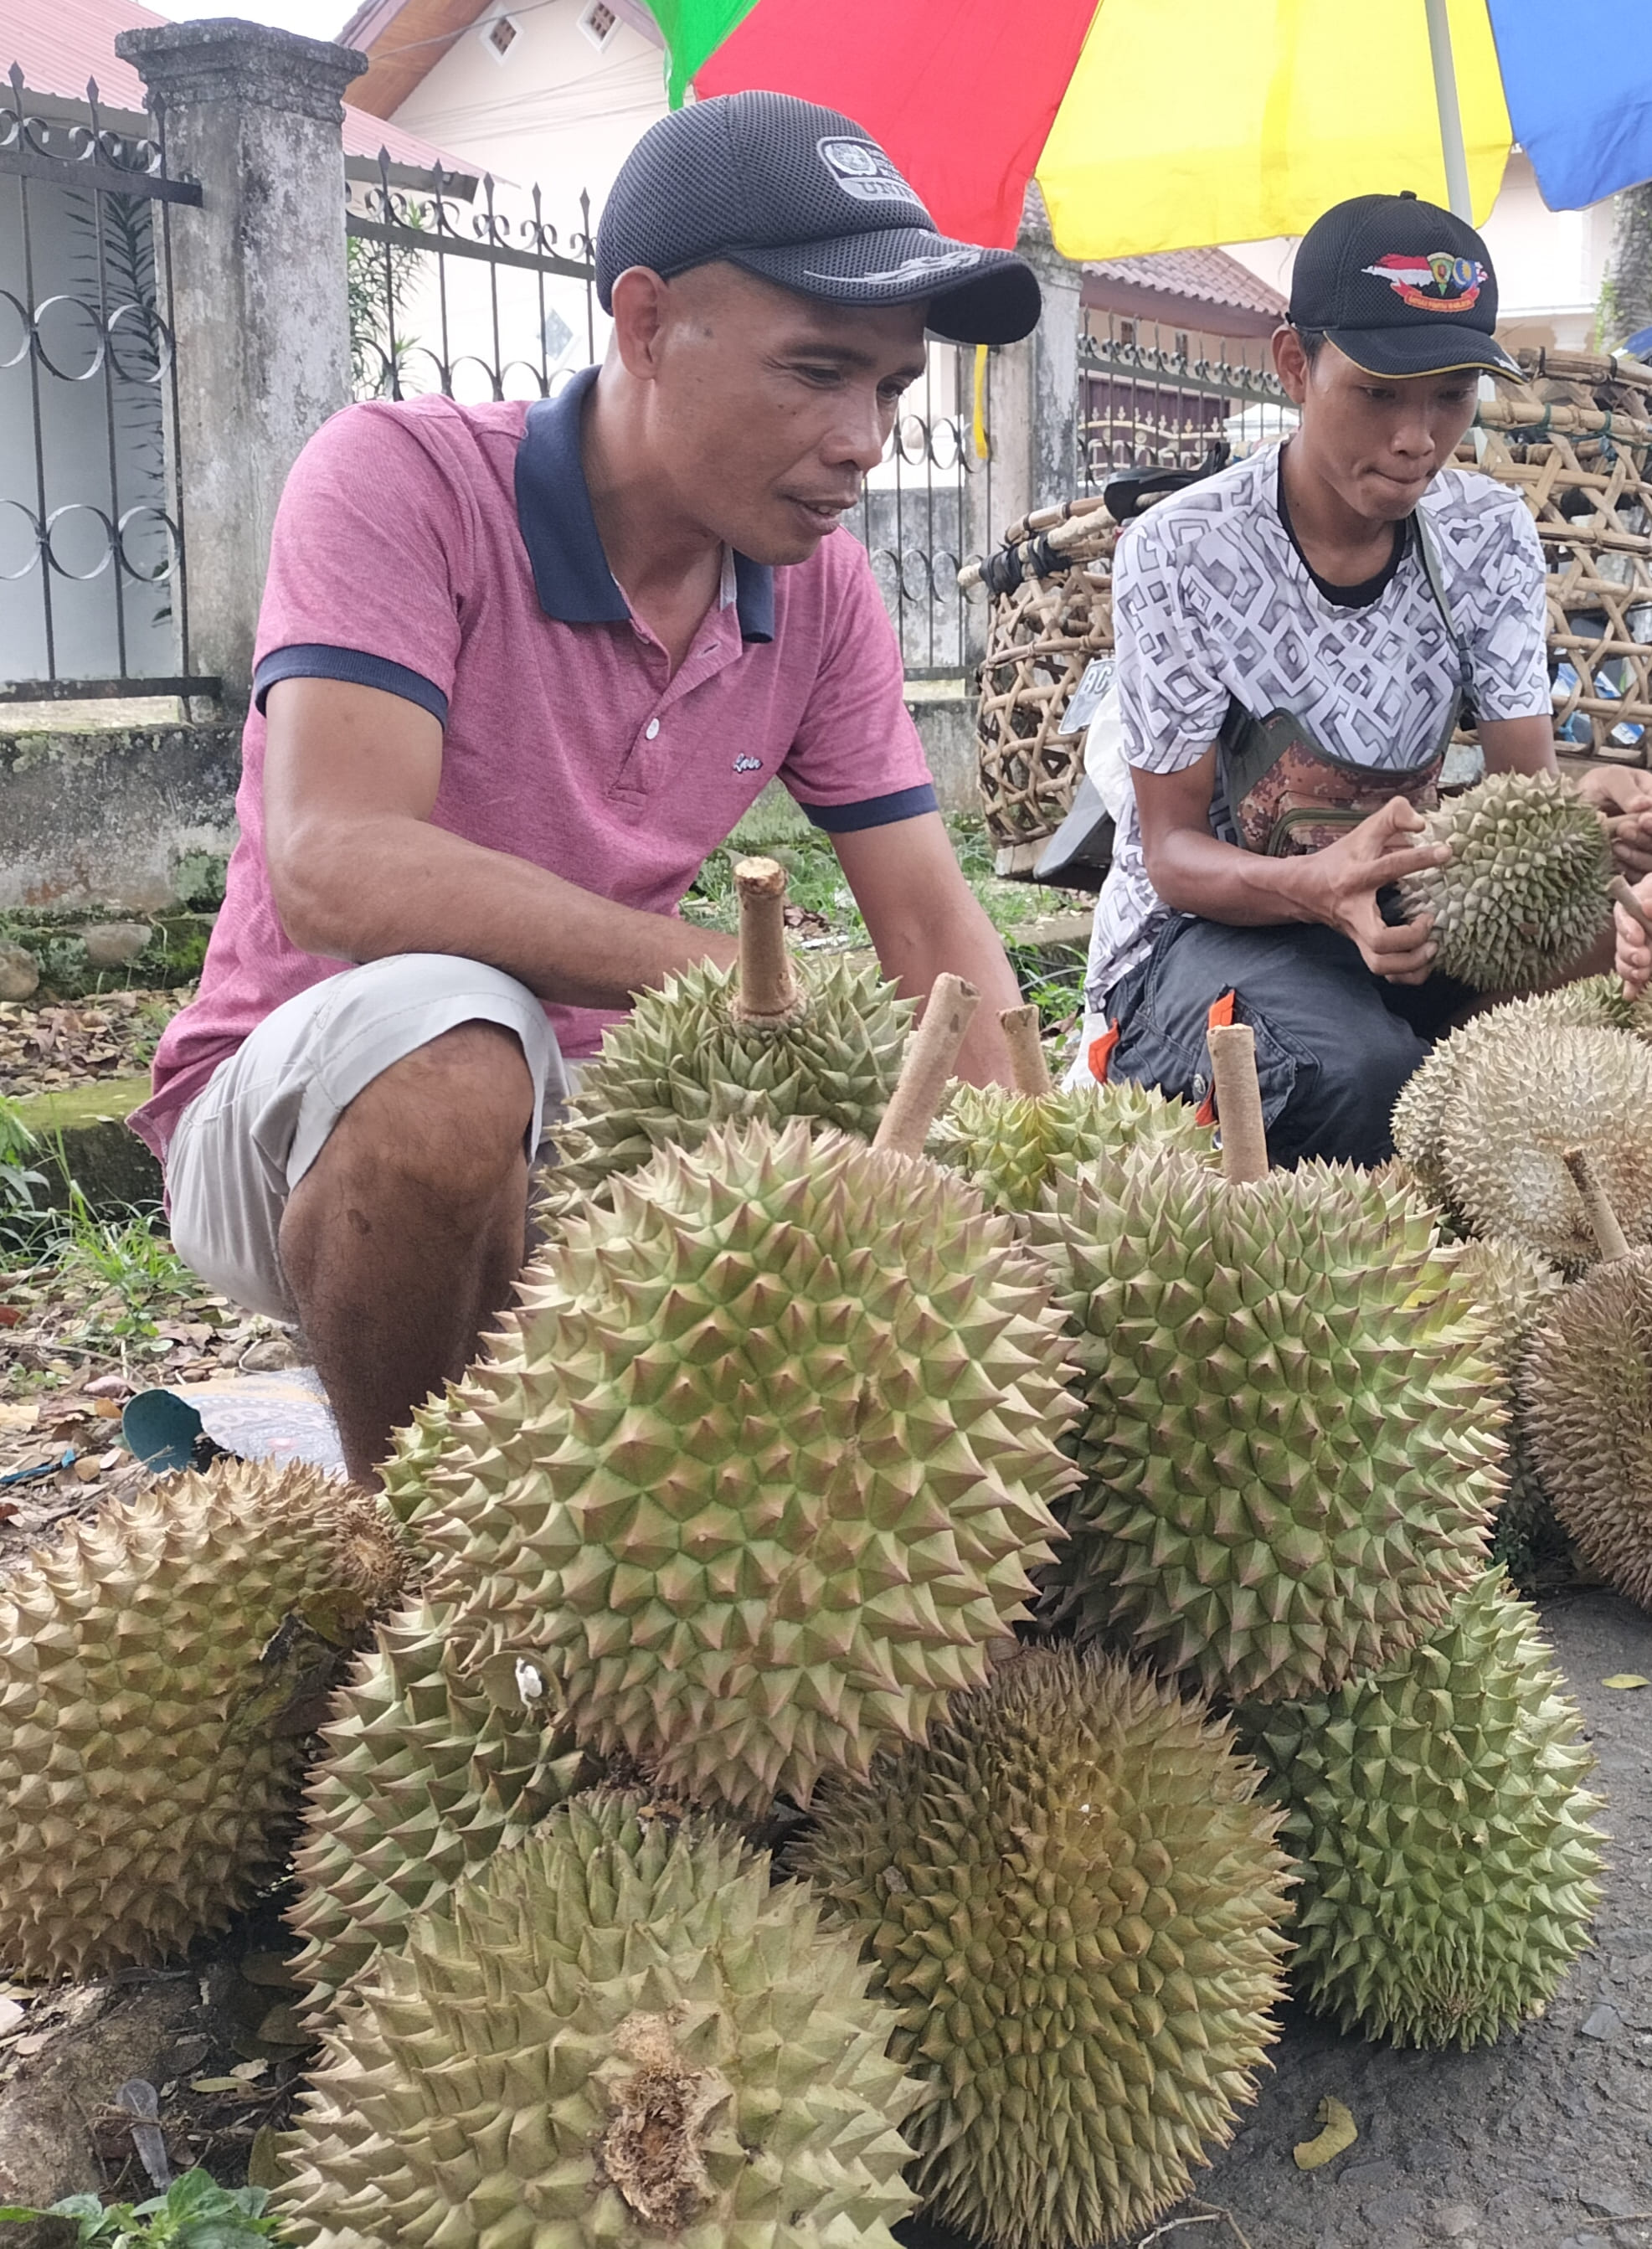 Yuk Mari Icip-icip Durian Lubuklinggau, Rasa Manisnya Bikin Ketagihan 